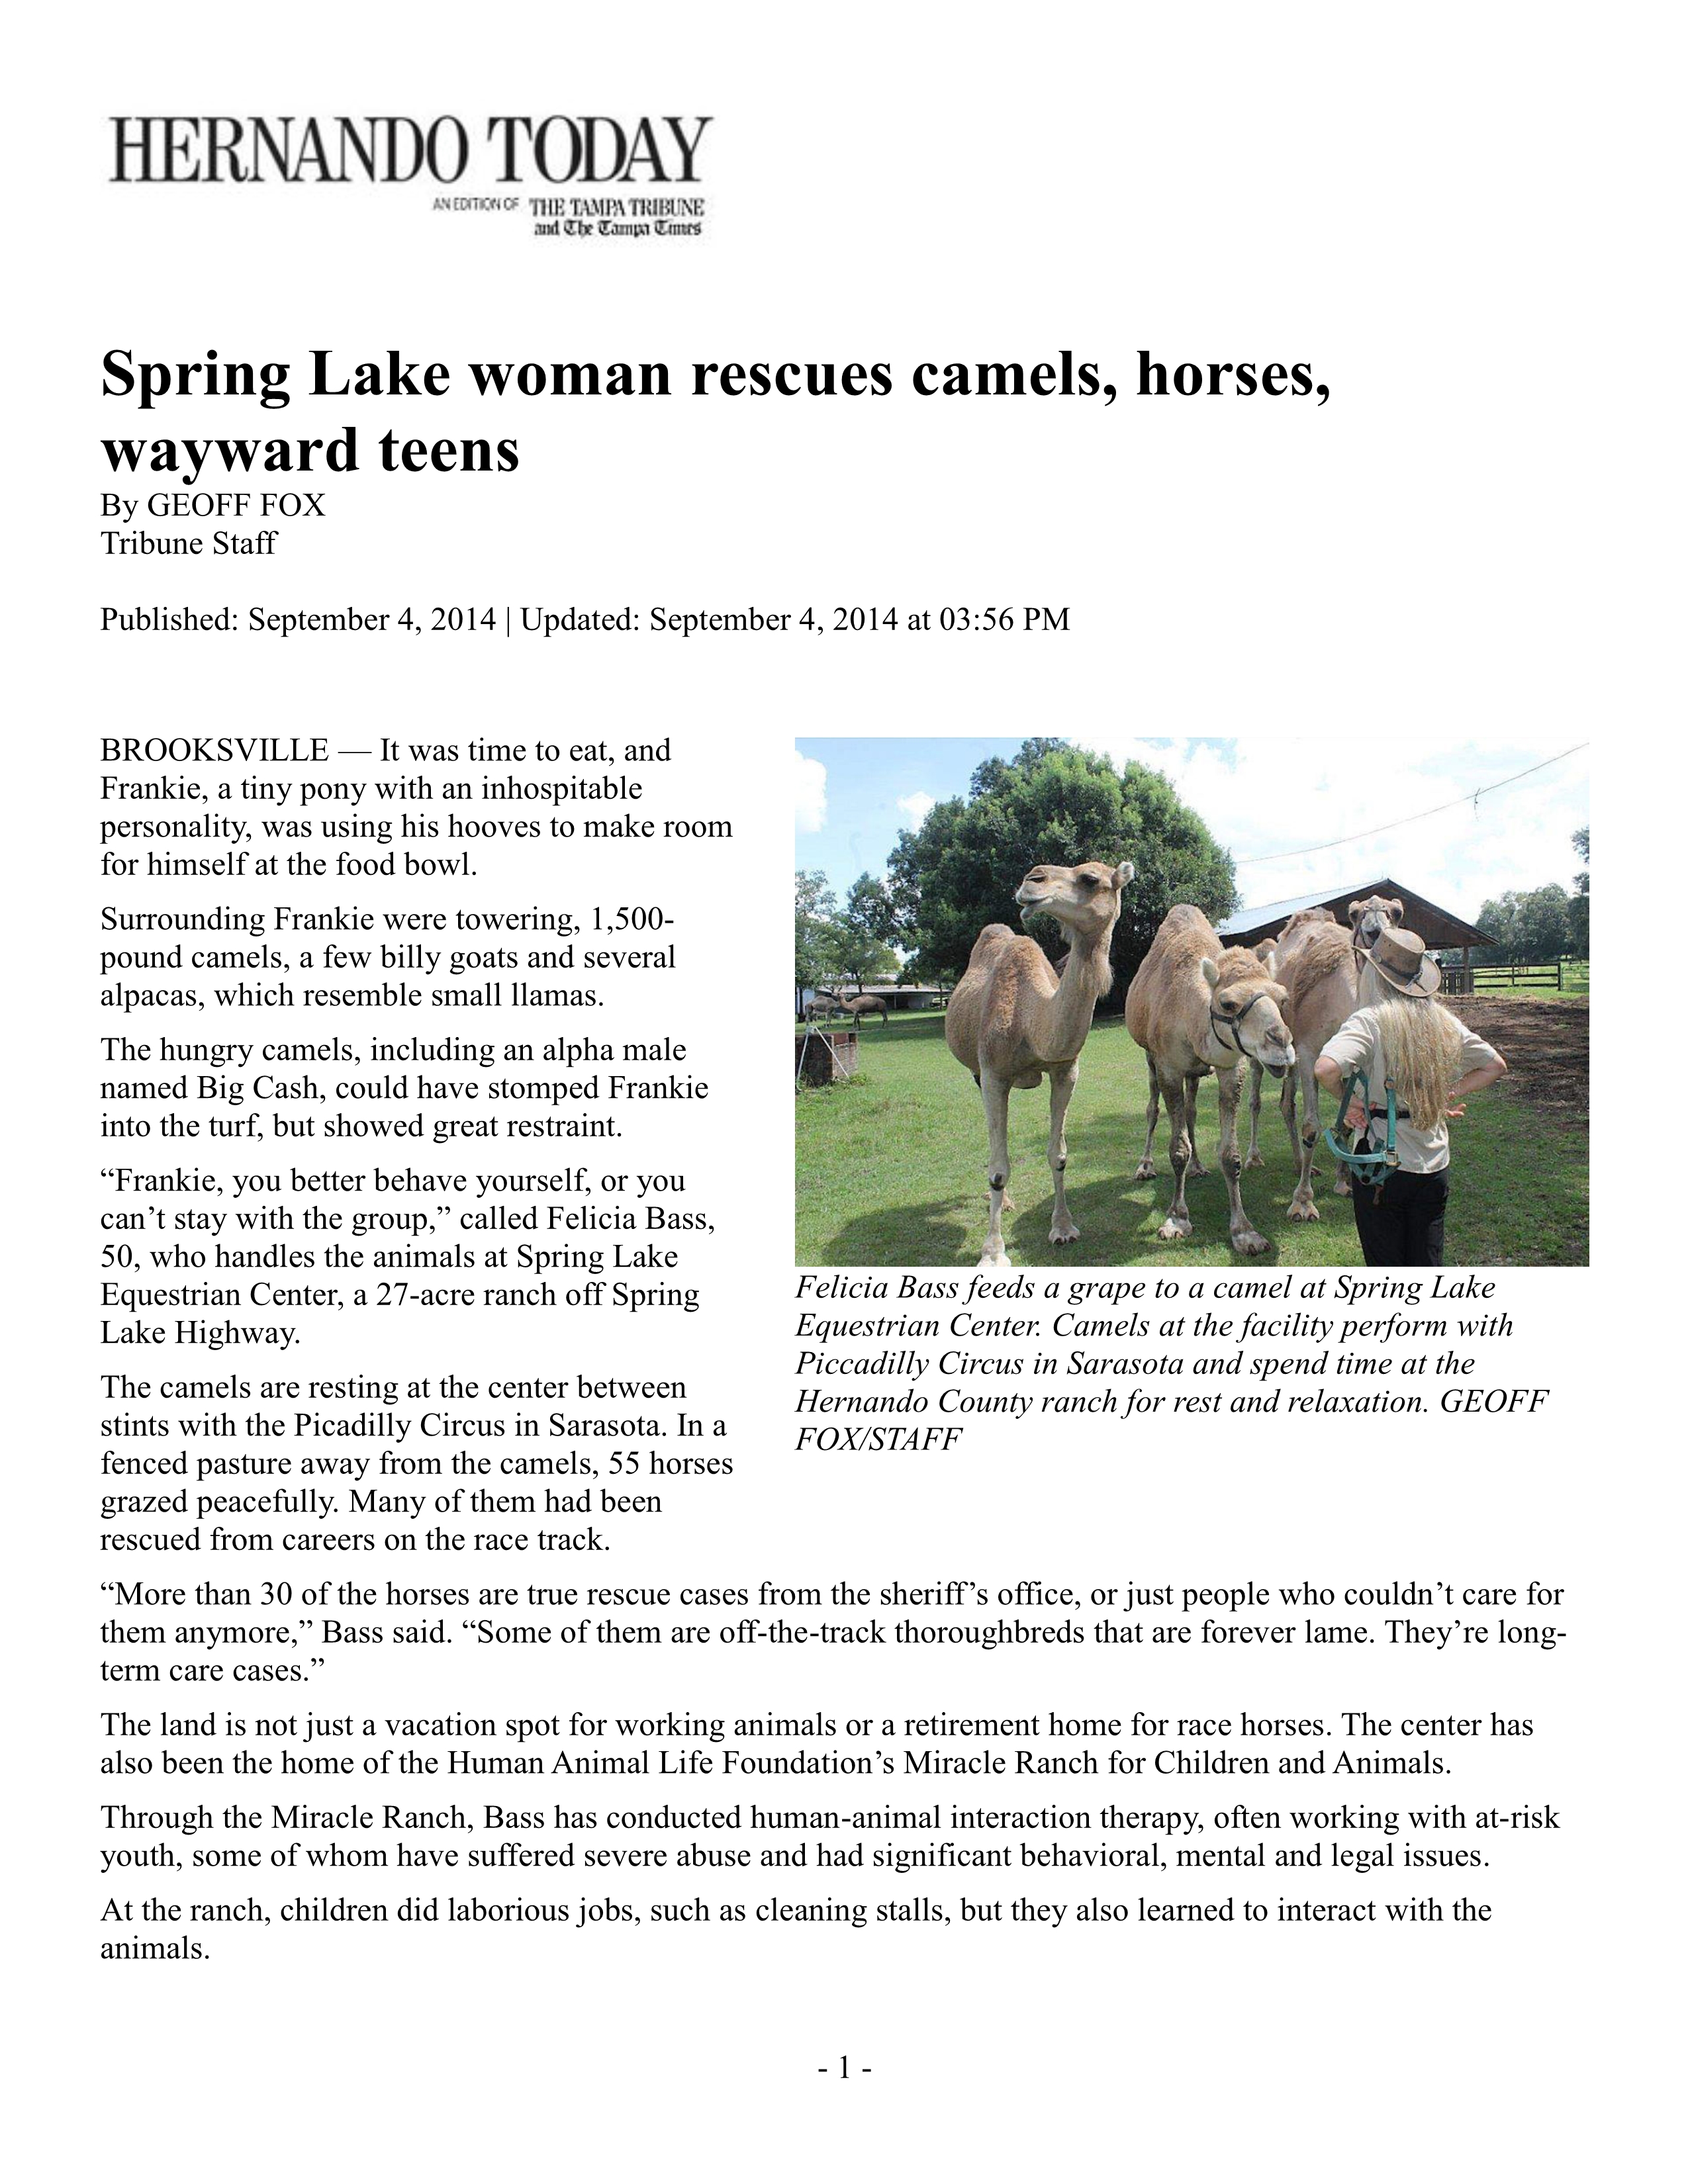 Spring Lake woman rescues camels, horses, wayward teens 09-04-2014 Pg1